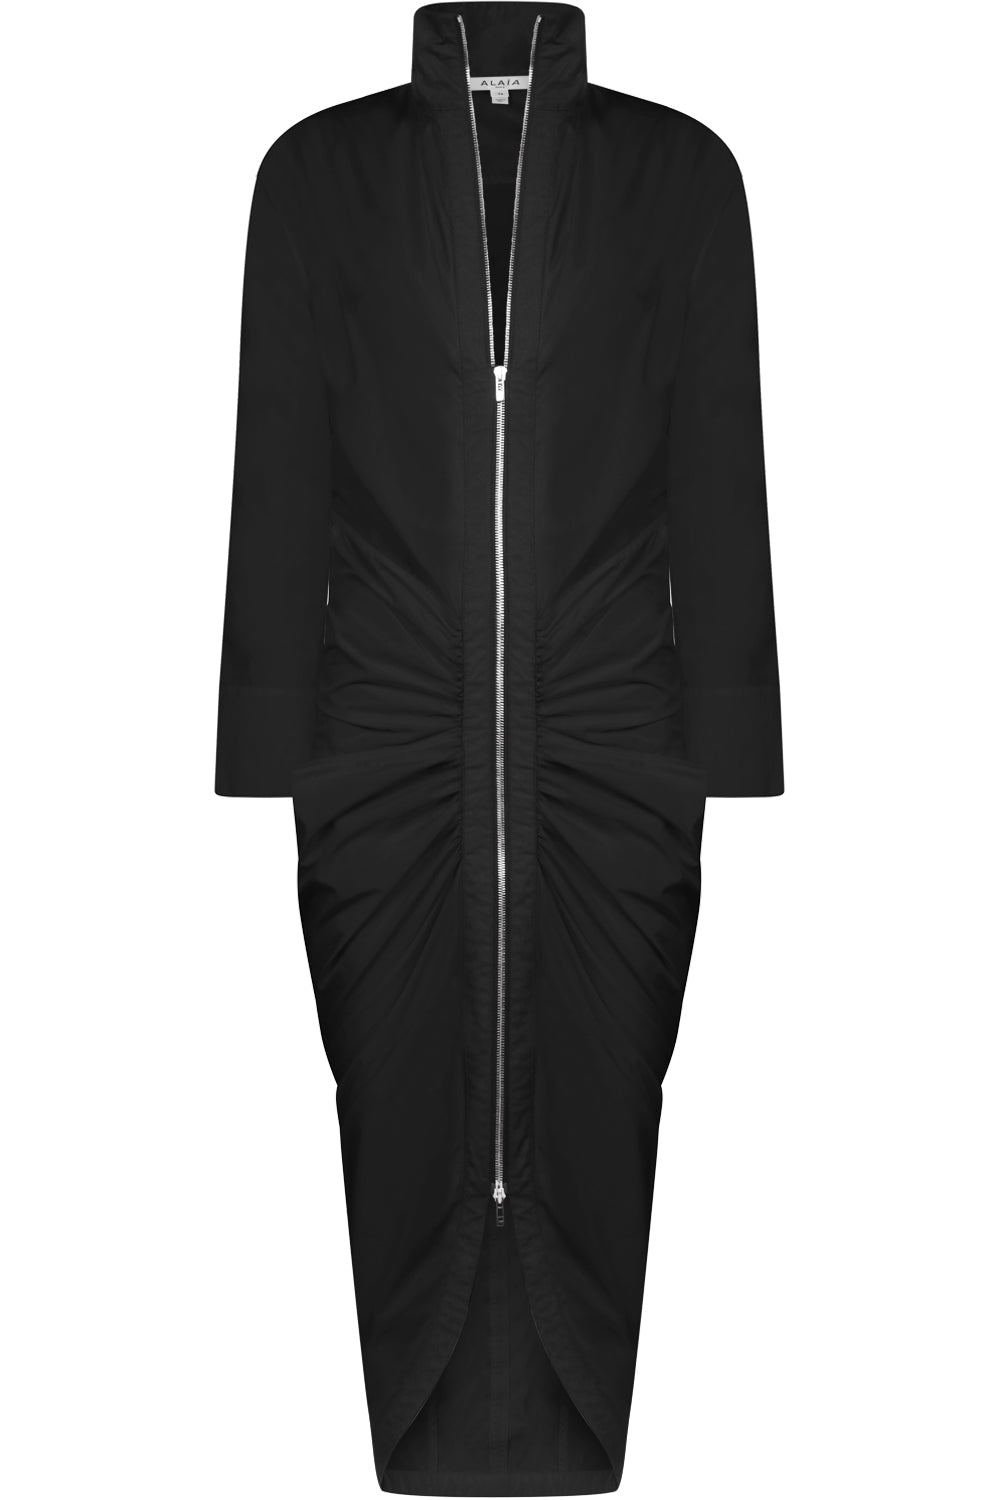 ALAIA RTW ZIPPED L/S COTTON POPLIN DRESS | BLACK